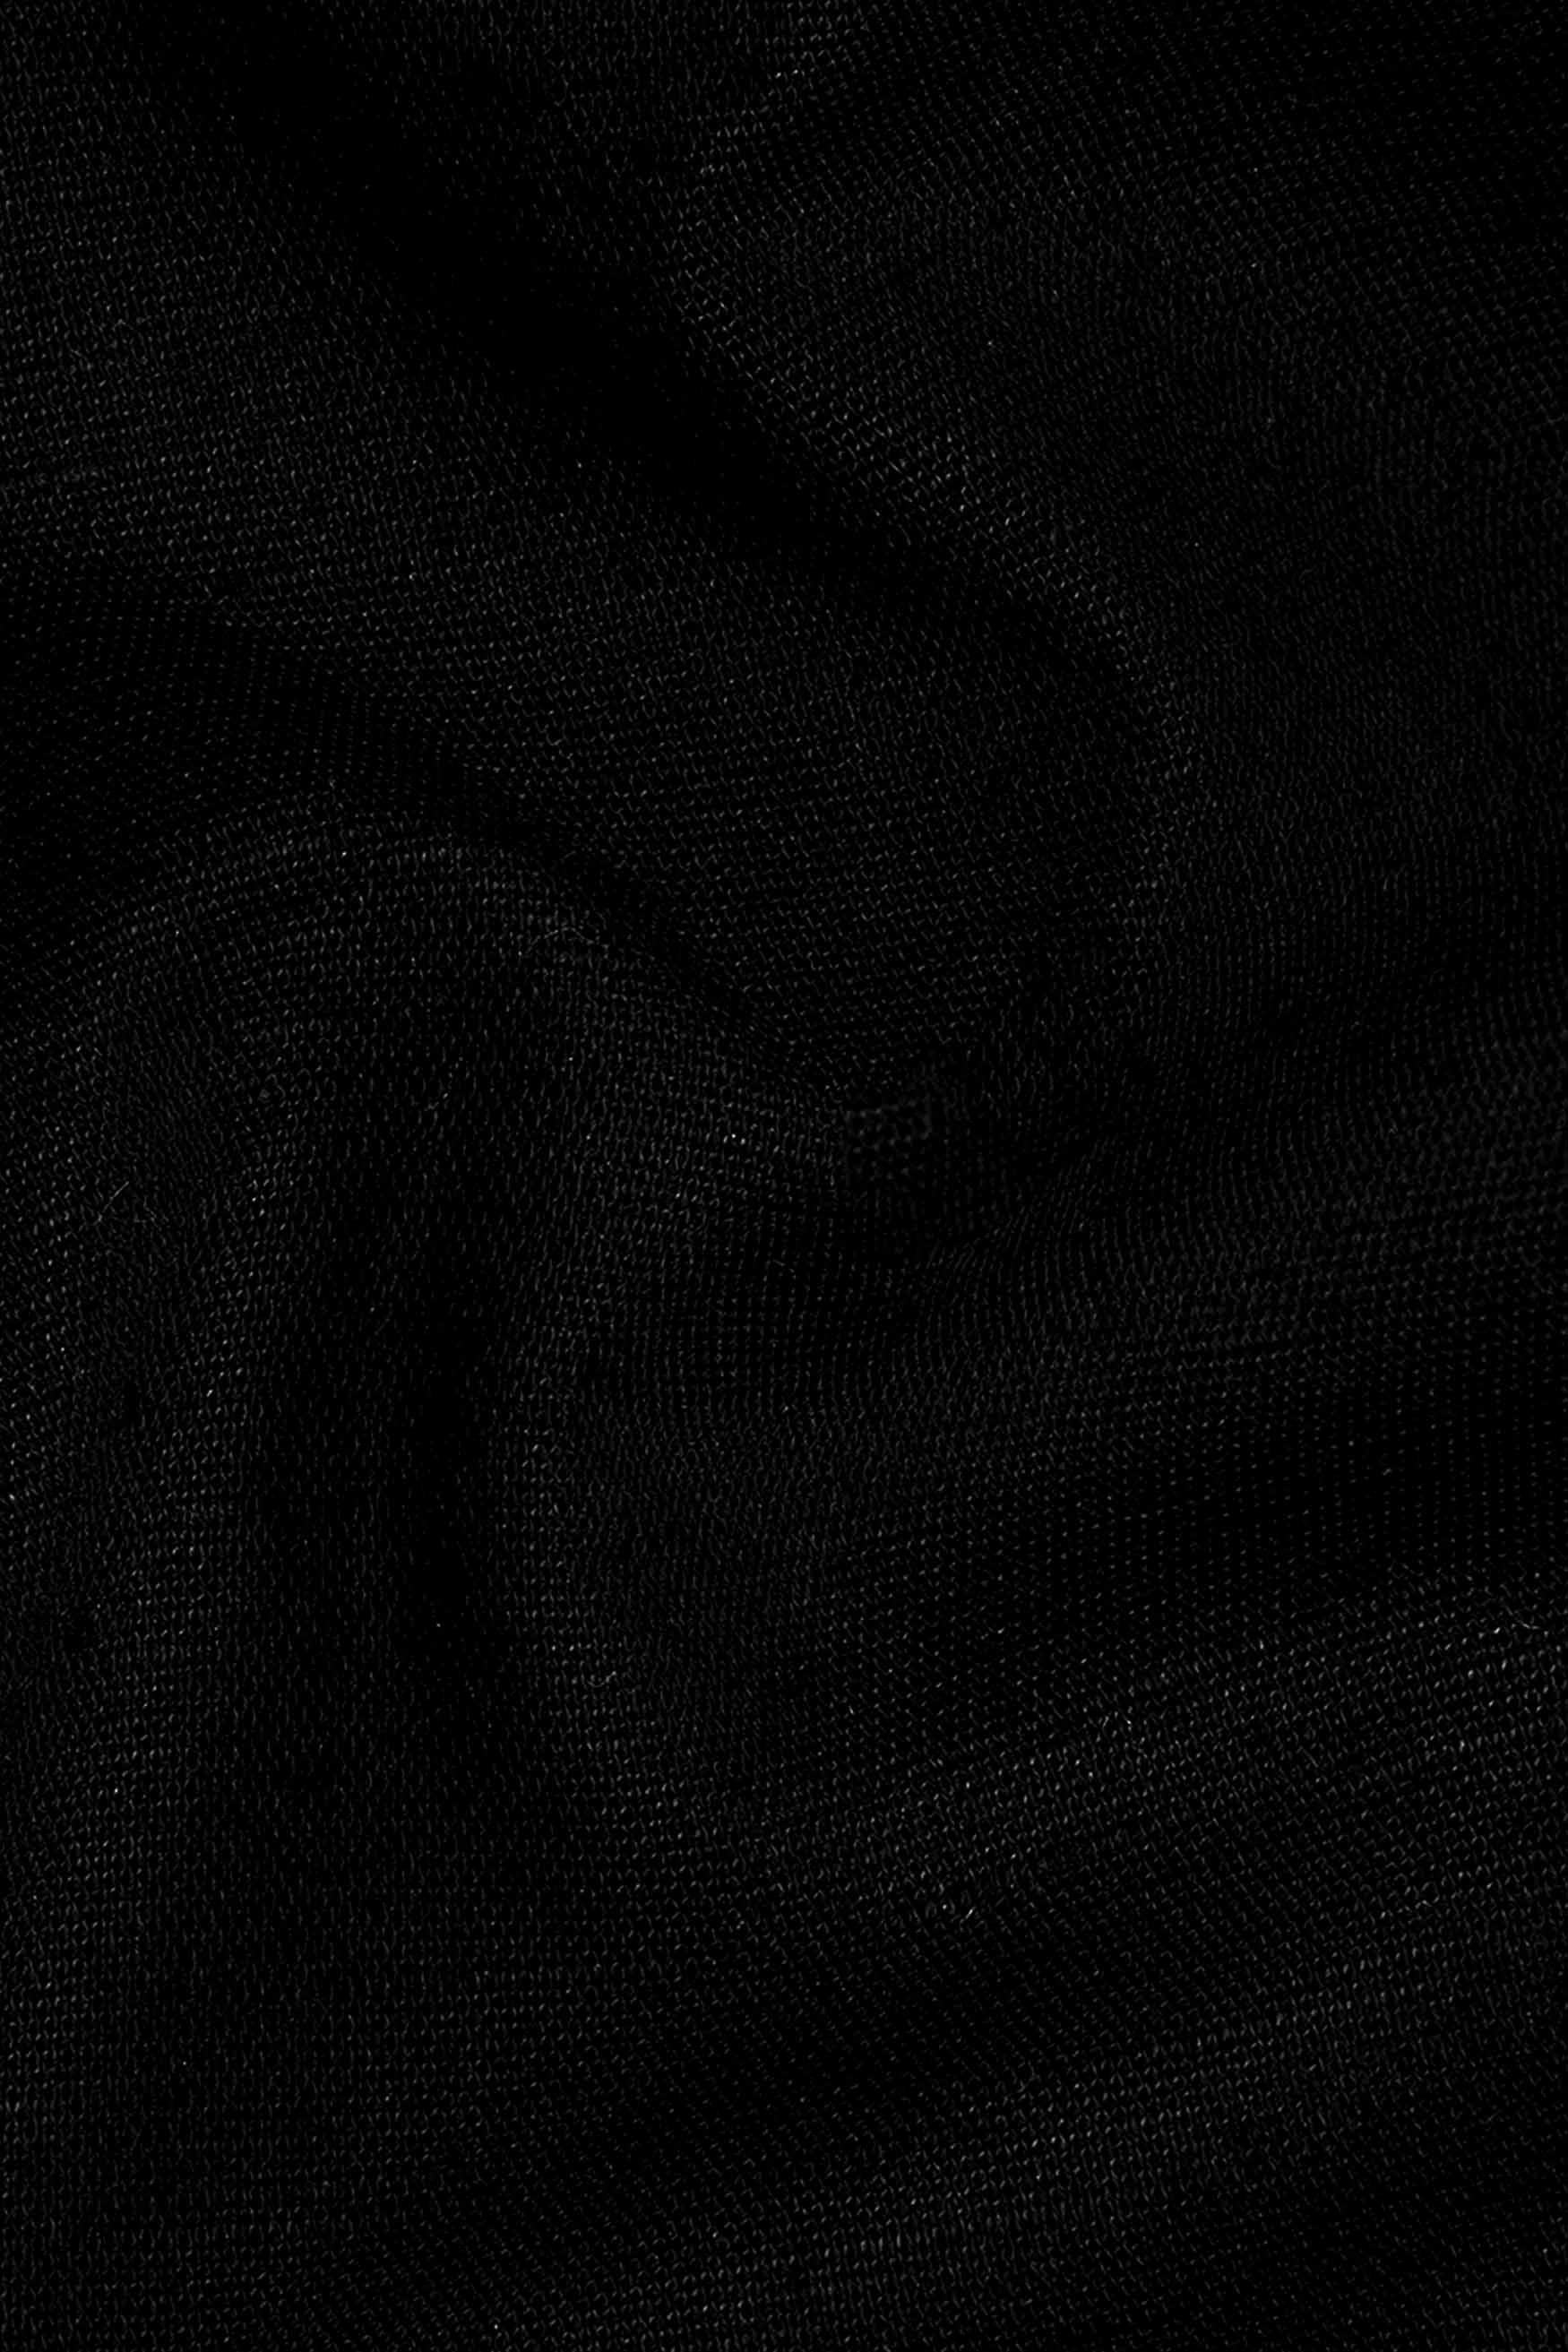 Jade Black with Lord Shiva Trident Embroidered Luxurious Linen Designer Shirt 11258-BLK-E191-38, 11258-BLK-E191-H-38, 11258-BLK-E191-39, 11258-BLK-E191-H-39, 11258-BLK-E191-40, 11258-BLK-E191-H-40, 11258-BLK-E191-42, 11258-BLK-E191-H-42, 11258-BLK-E191-44, 11258-BLK-E191-H-44, 11258-BLK-E191-46, 11258-BLK-E191-H-46, 11258-BLK-E191-48, 11258-BLK-E191-H-48, 11258-BLK-E191-50, 11258-BLK-E191-H-50, 11258-BLK-E191-52, 11258-BLK-E191-H-52